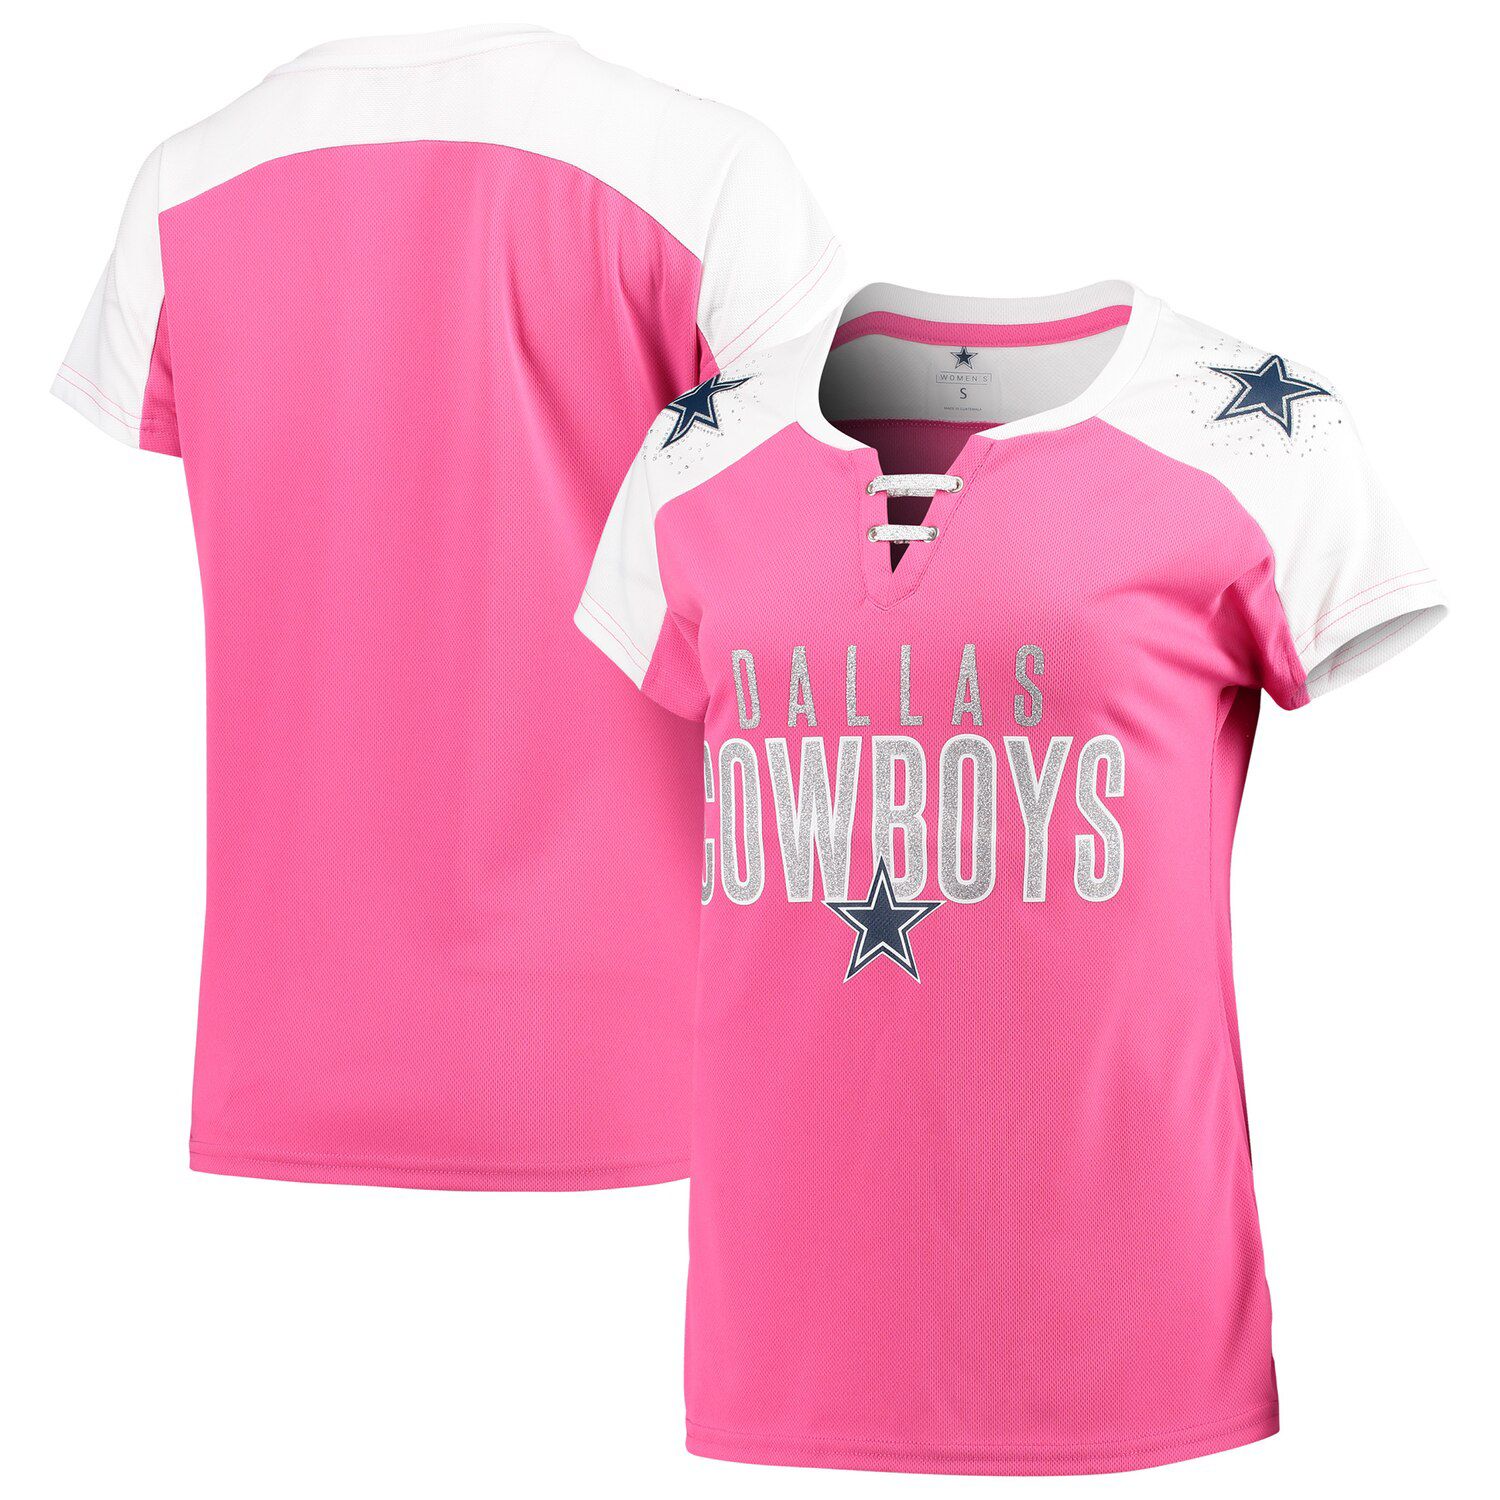 cowboys pink jersey